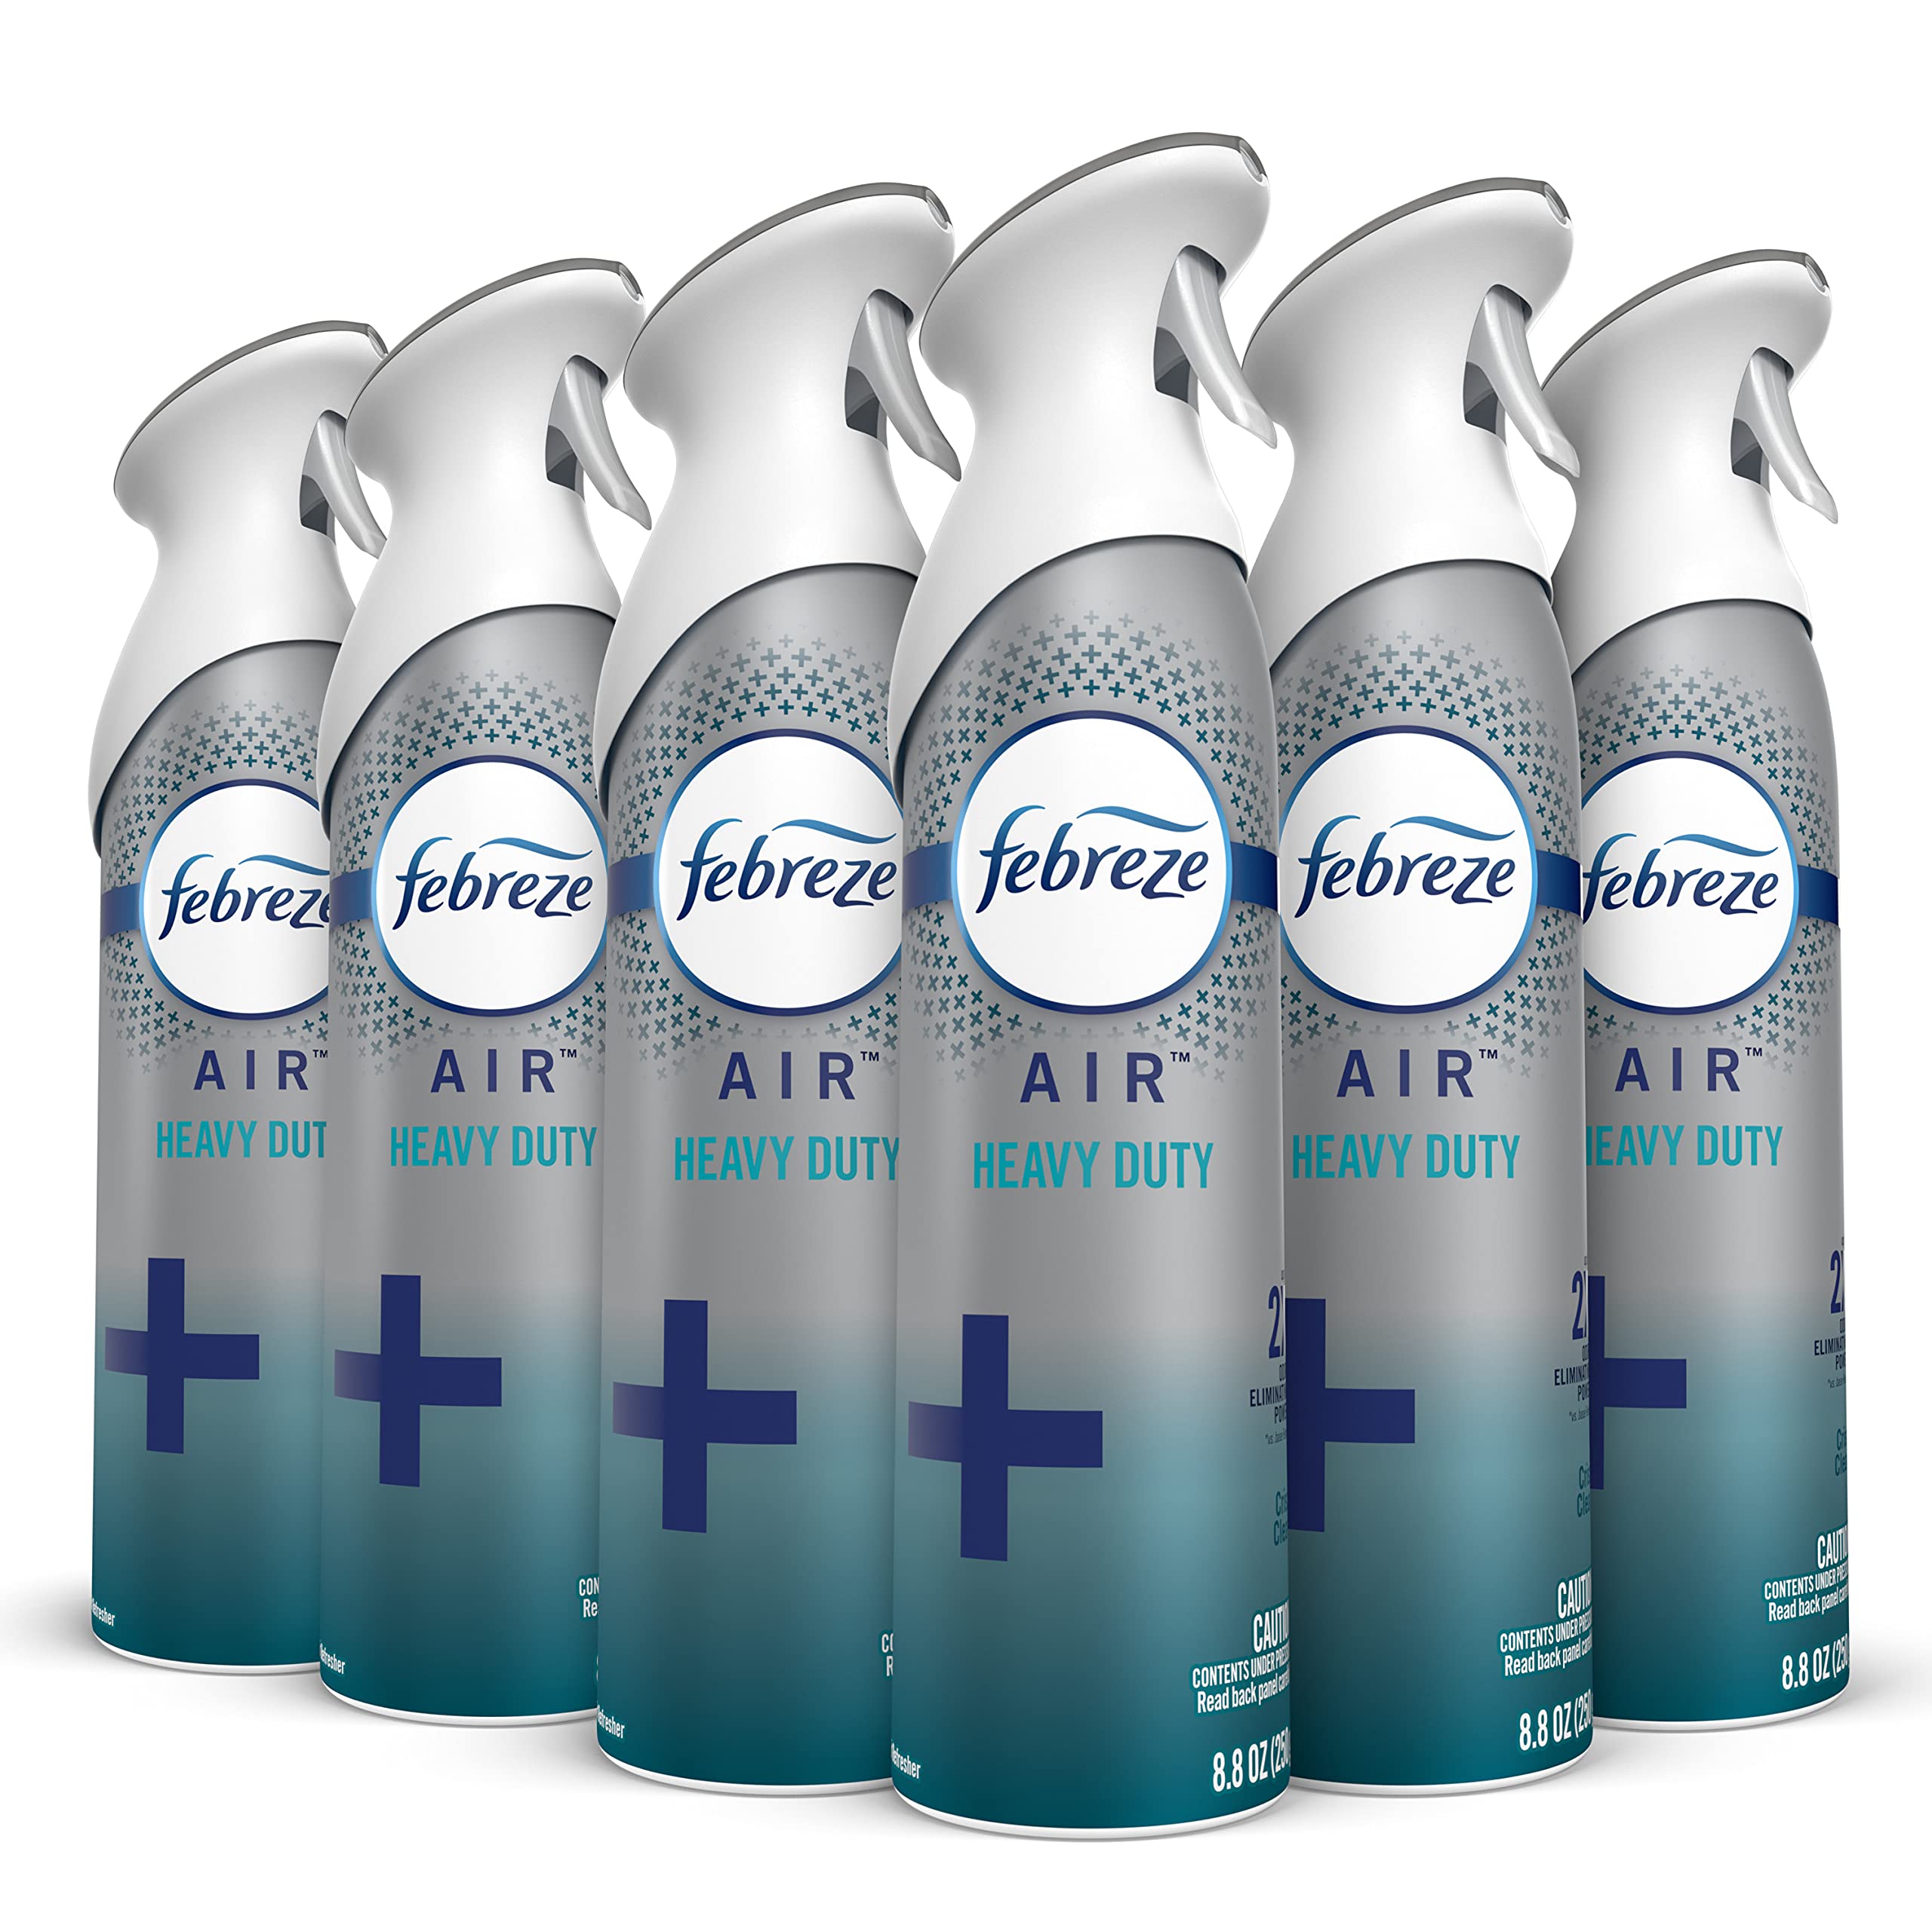 Febreze Air Freshener Heavy Duty Spray, Odor Fighter, Crisp Clean, 8.8 oz (Pack of 6)